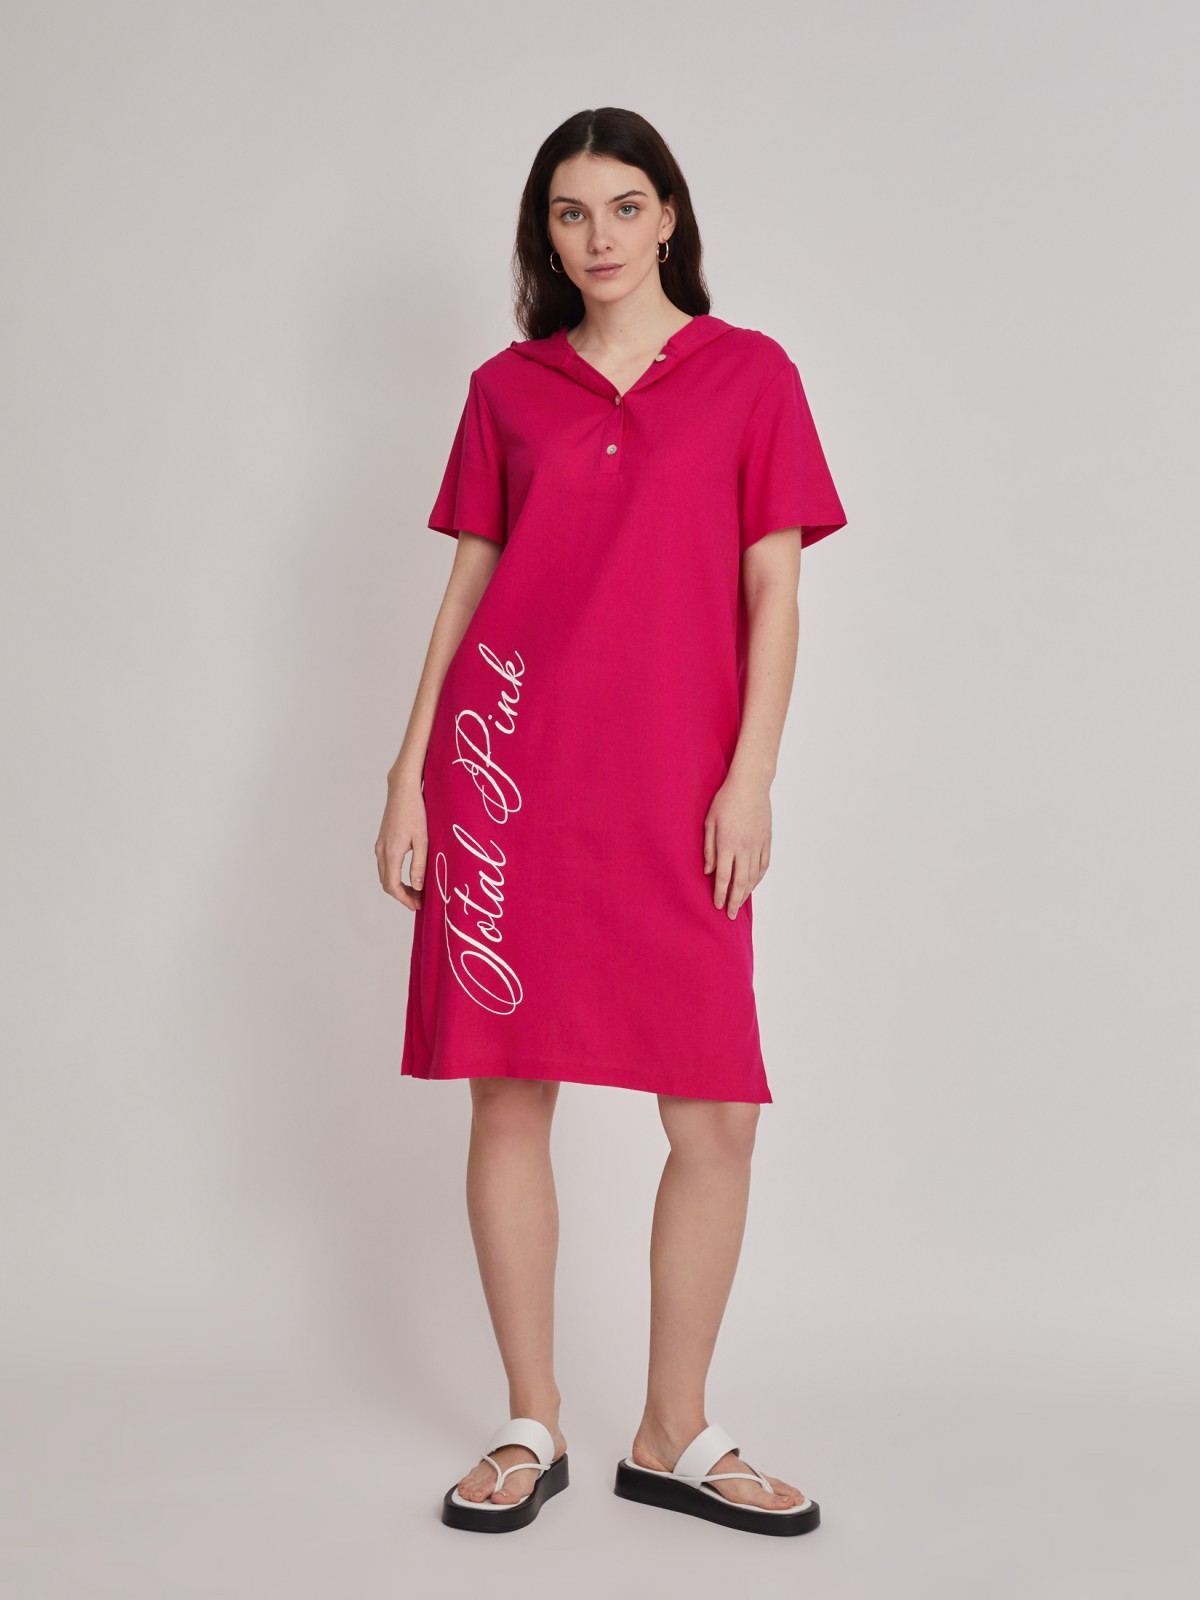 Платье-футболка из льна с капюшоном zolla 223238262101, цвет фуксия, размер XS - фото 3